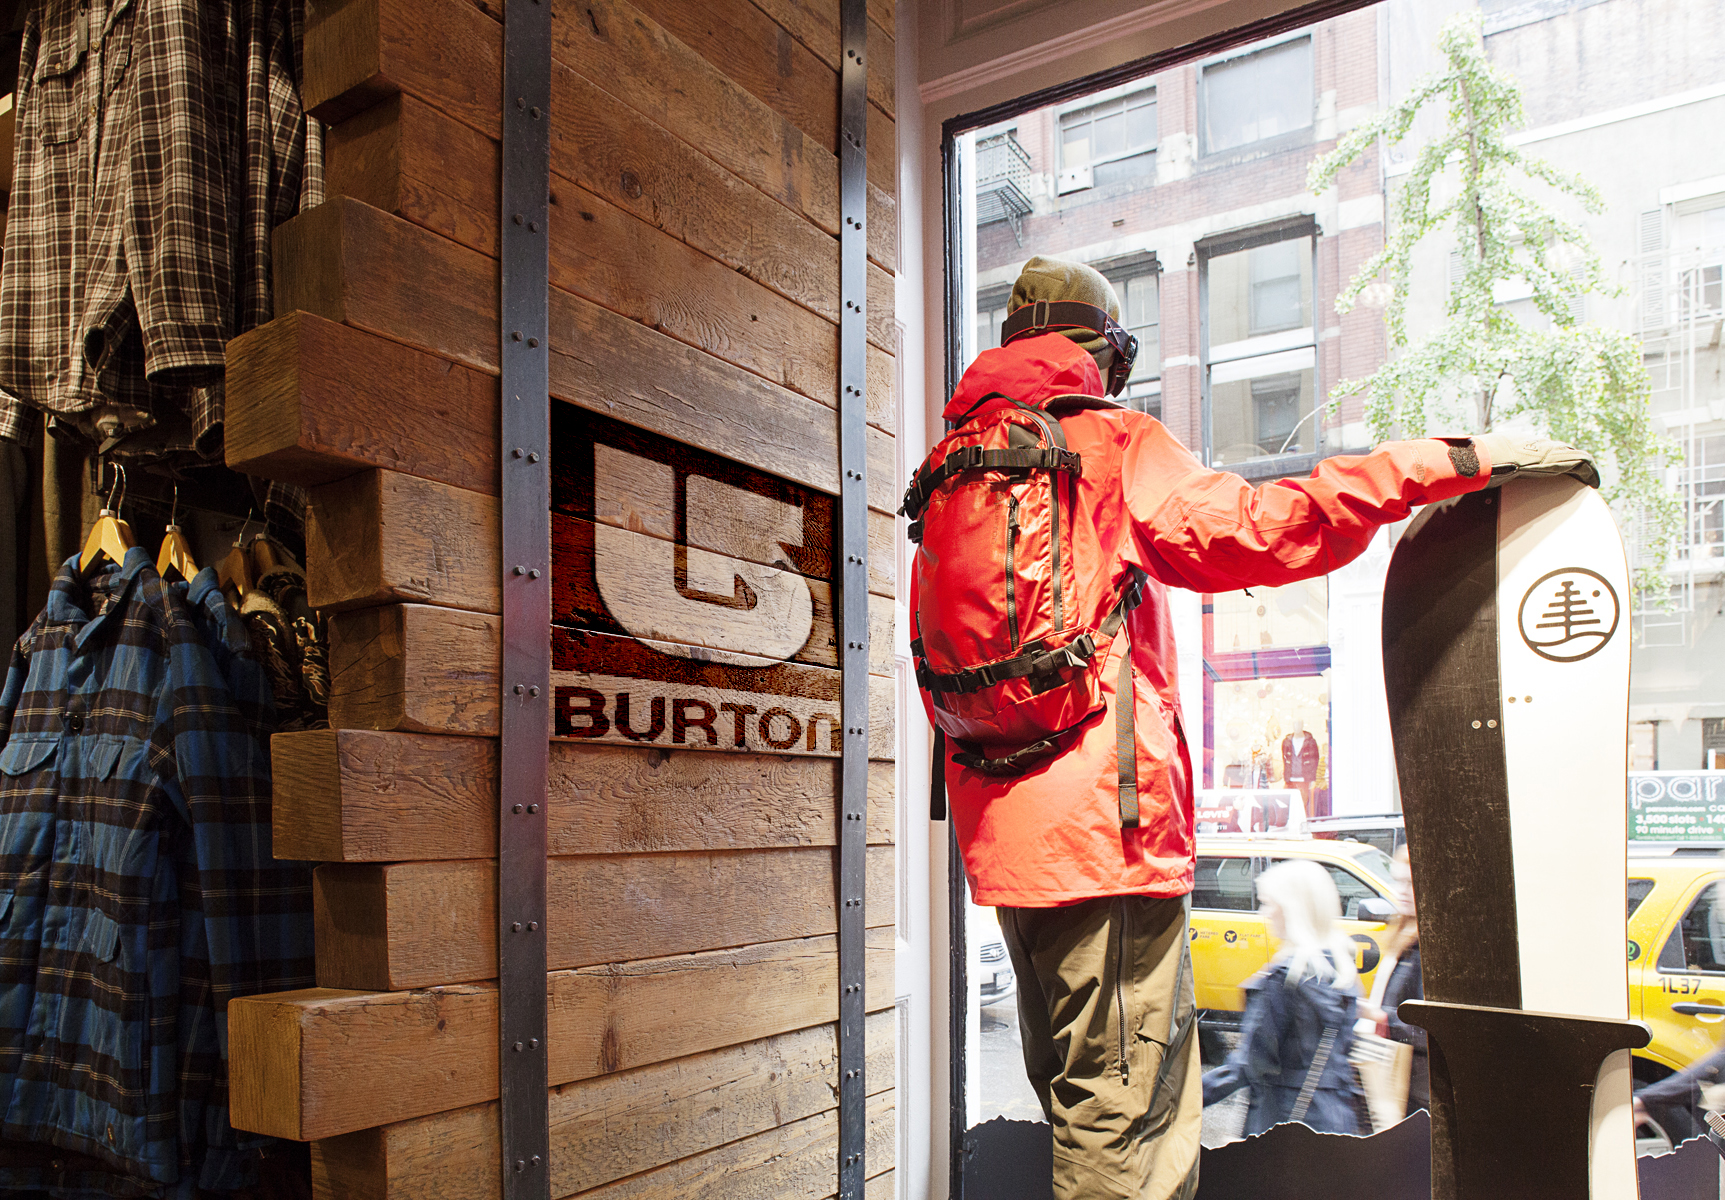 Burton Snowboards. Tobin Parnes Design. NY. Retail Design. Sales Area.